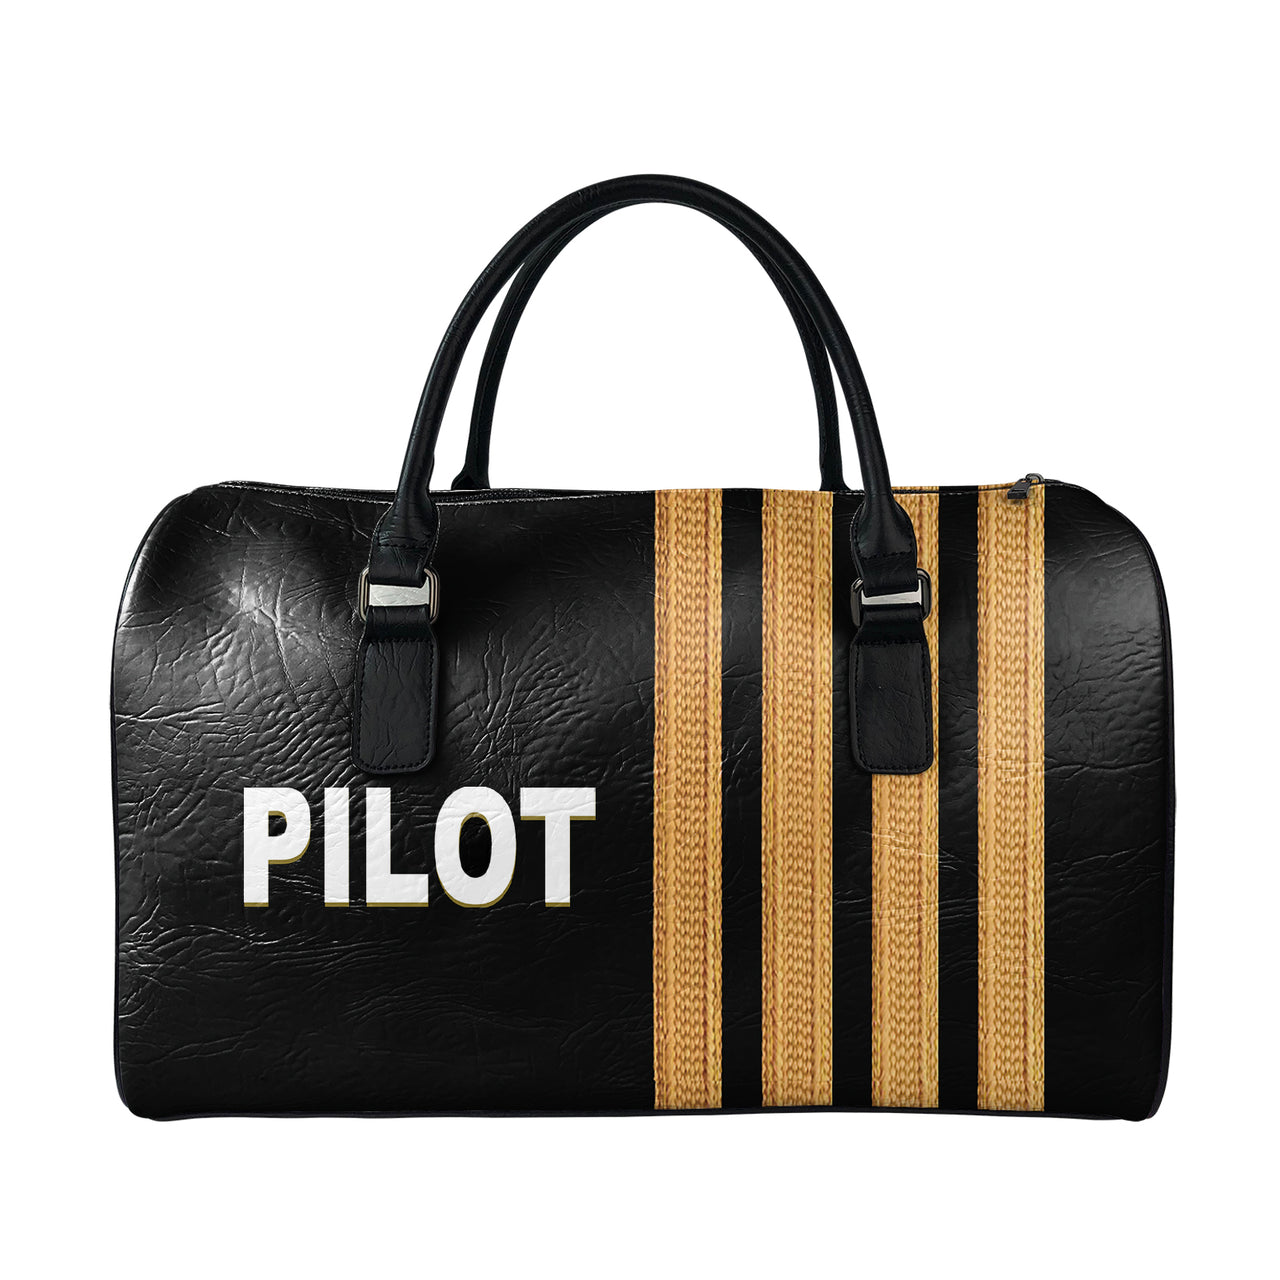 PILOT & Pilot Epaulettes (4,3,2 Lines) Designed Leather Travel Bag